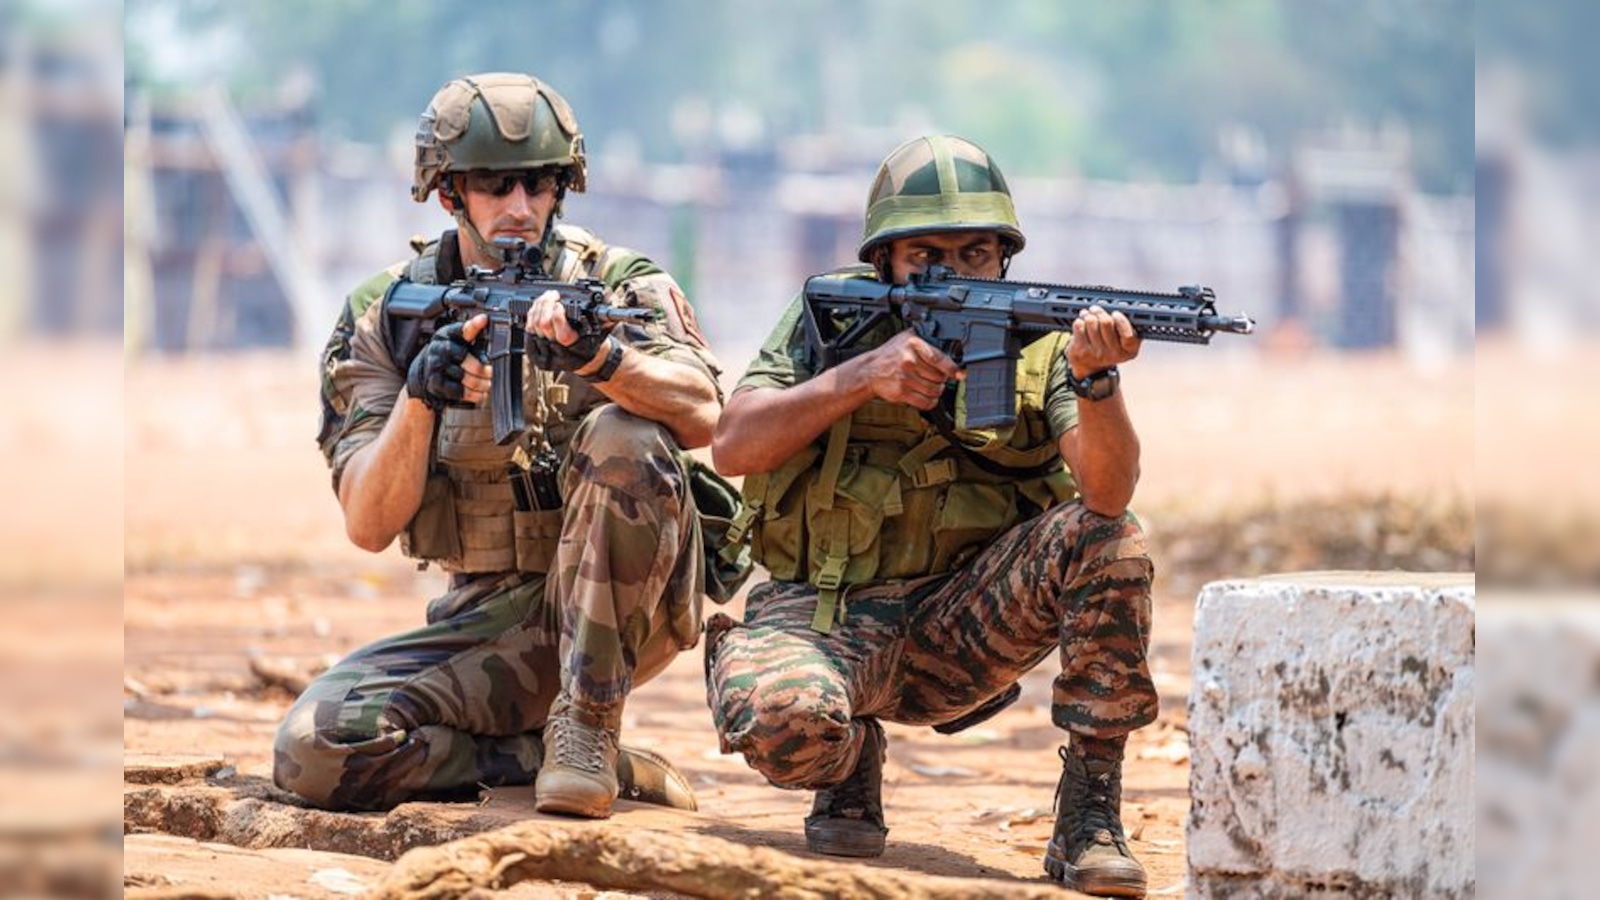 India and France Team Up for Exercise Shakti Mountain Warfare Training in Meghalaya